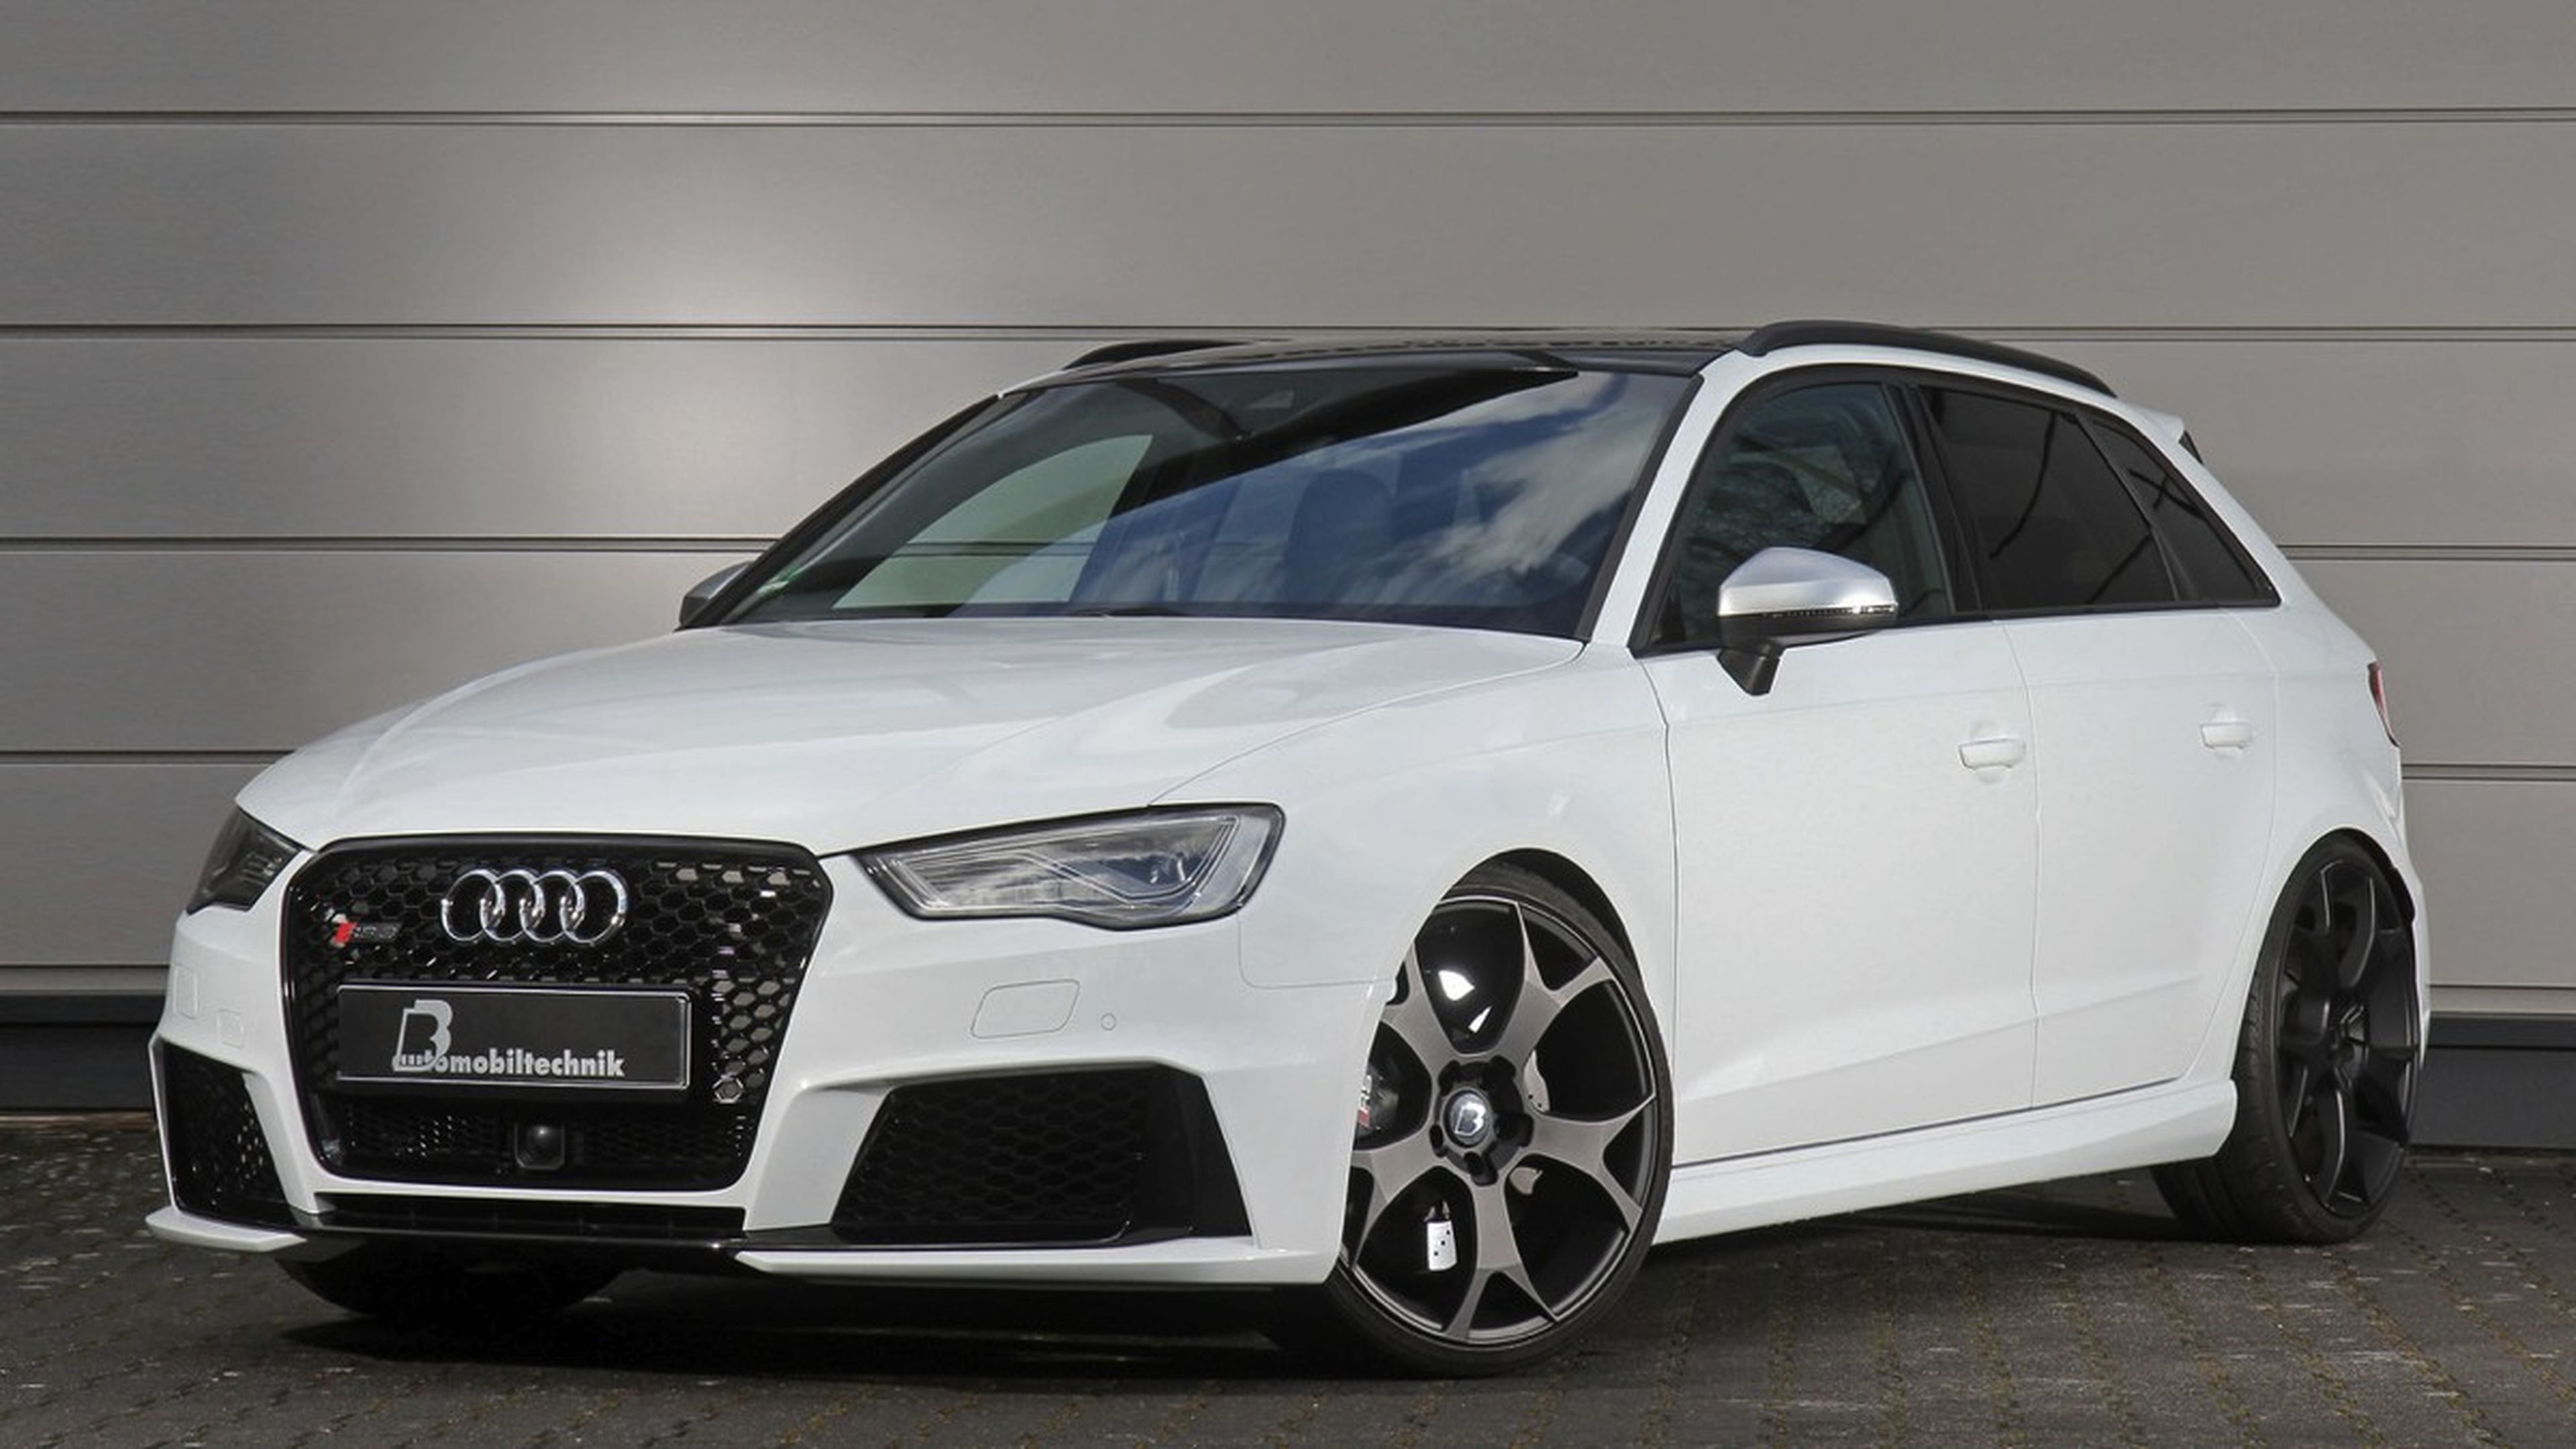 Audi RS3 by BB Automobiltechnik frontal